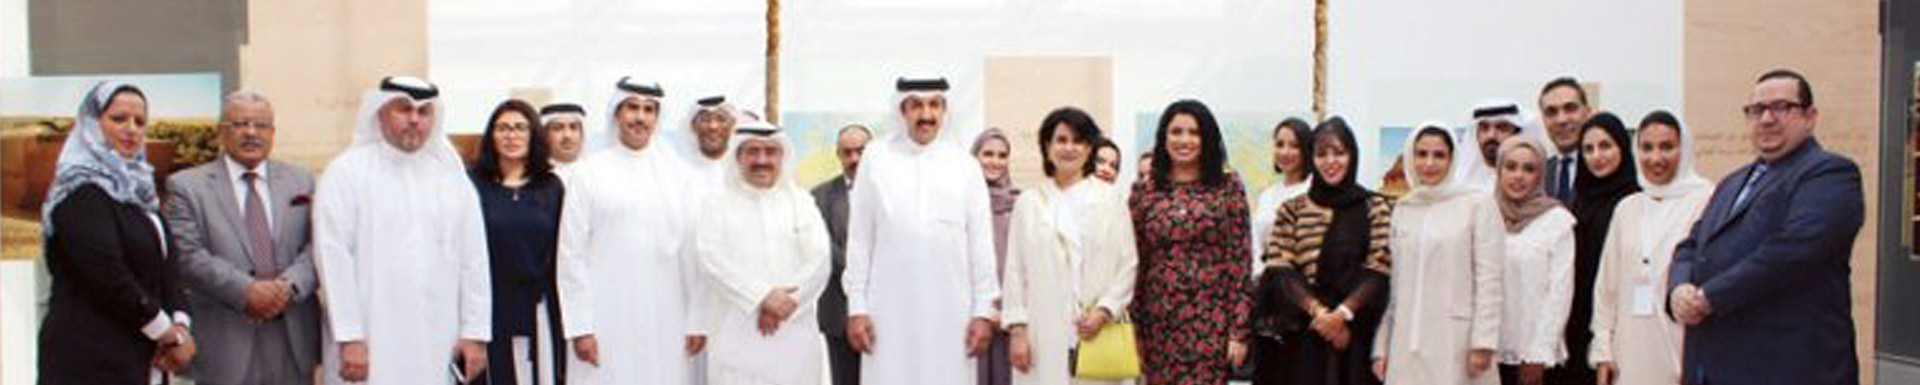 Arab World Heritage Forum Hosts Seminar Promoting a Culture of Tolerance in Media Discourse